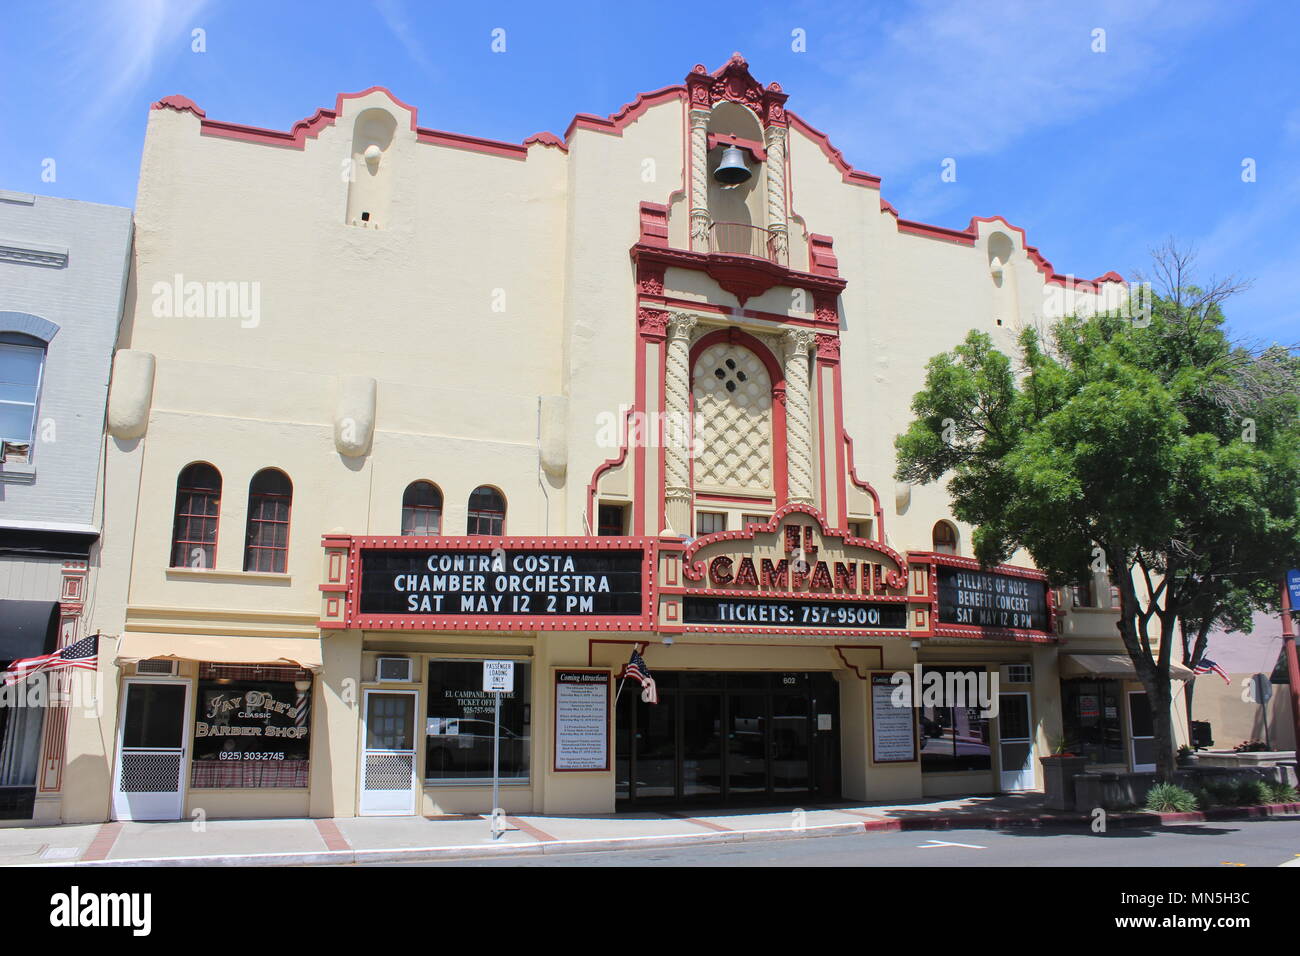 El Campanil Theatre, Antioche, Californie Banque D'Images